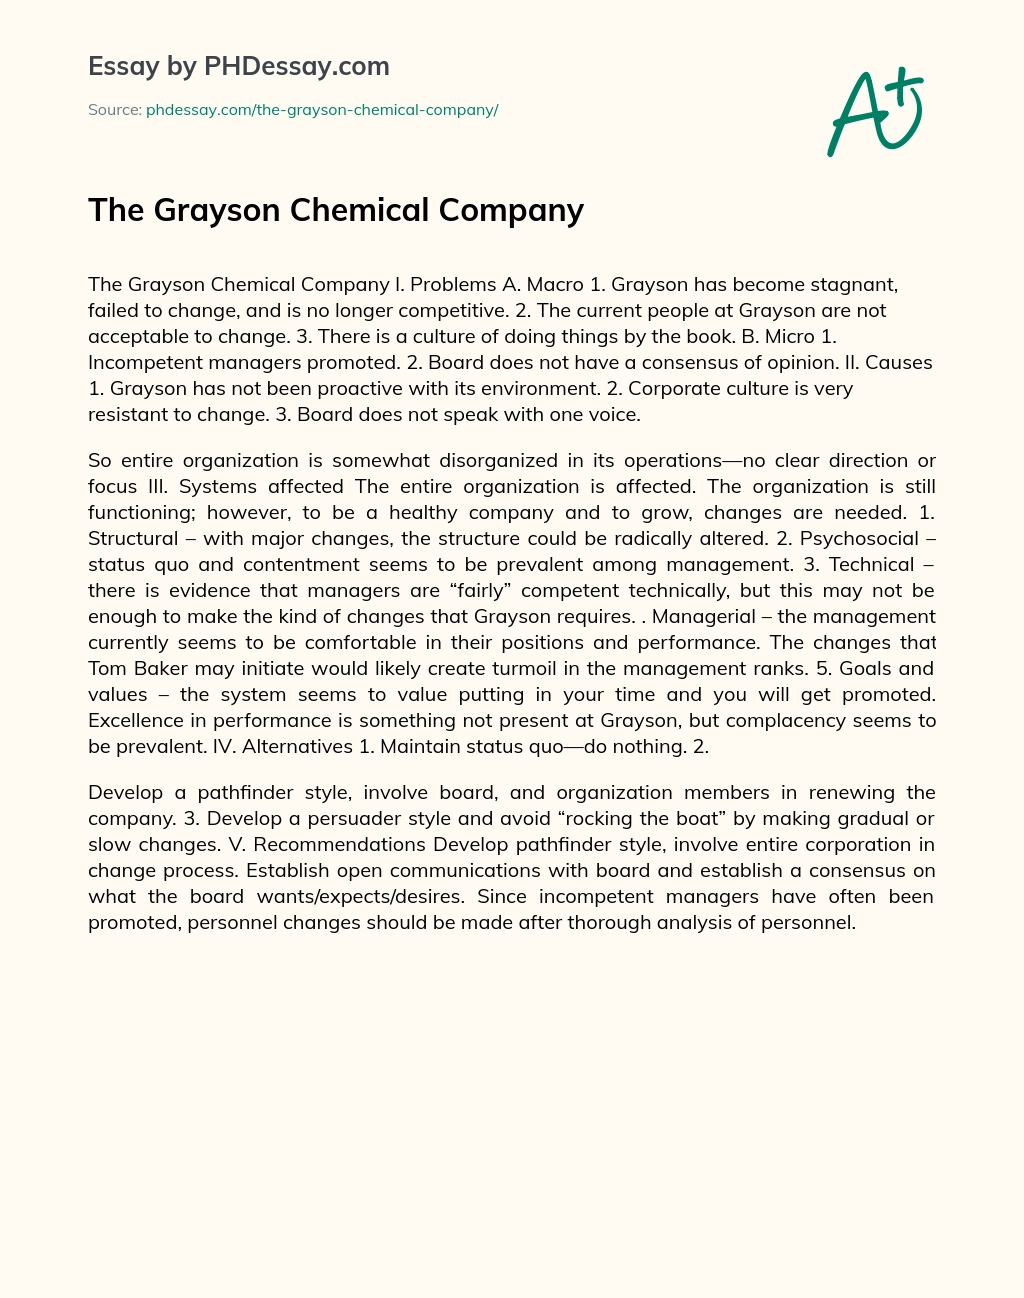 The Grayson Chemical Company essay